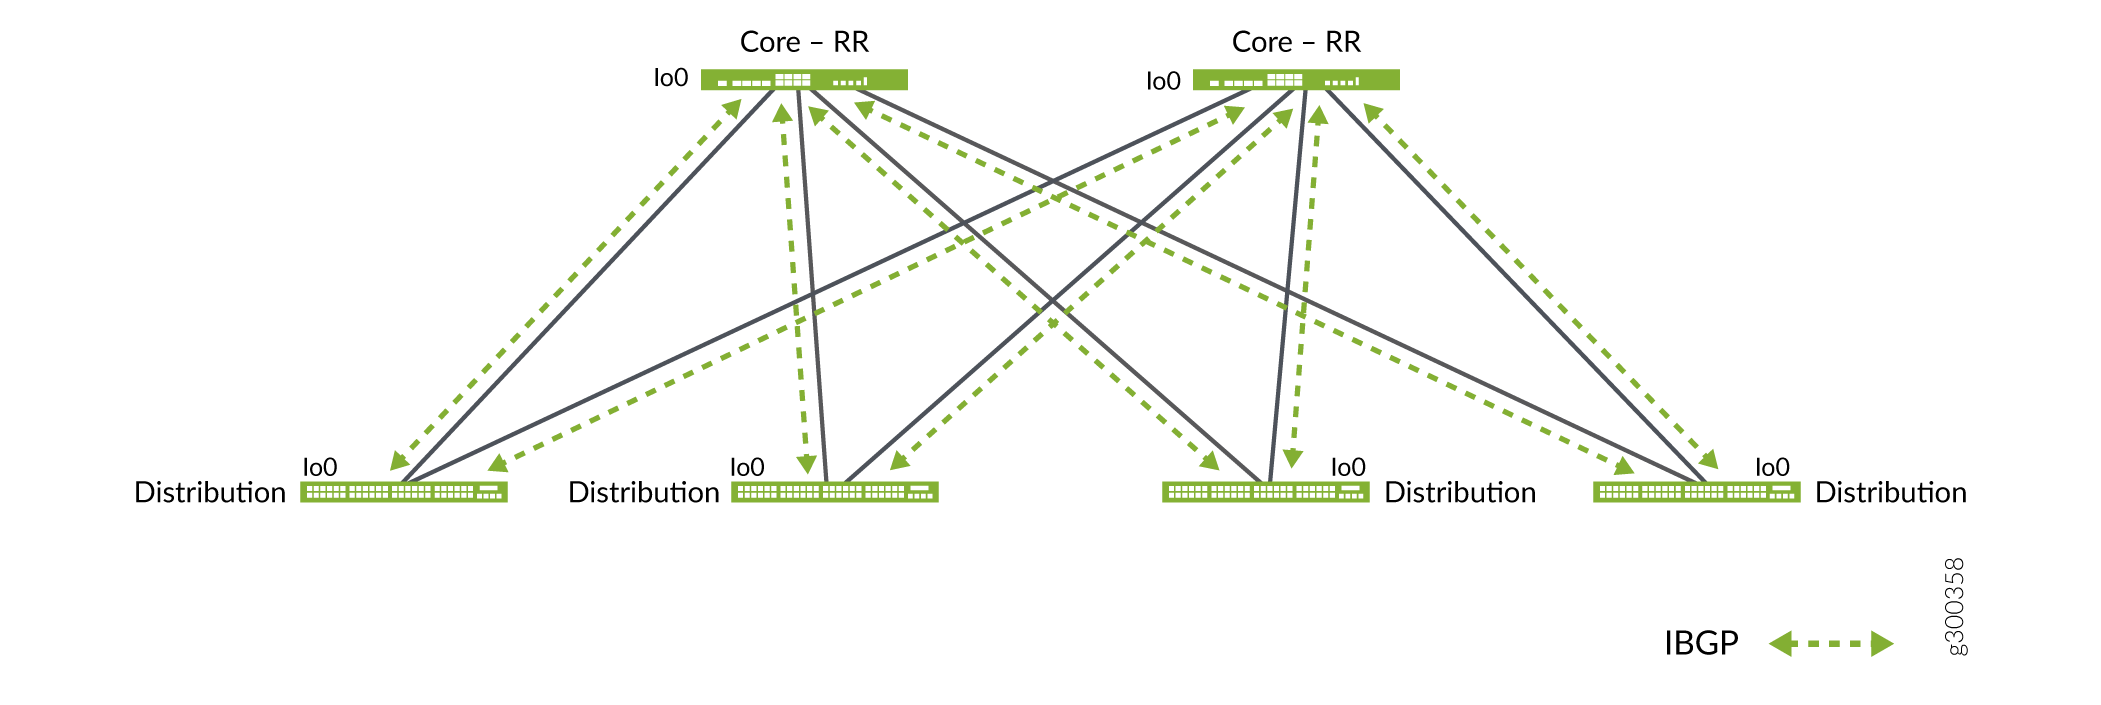 Overlay Network Topology